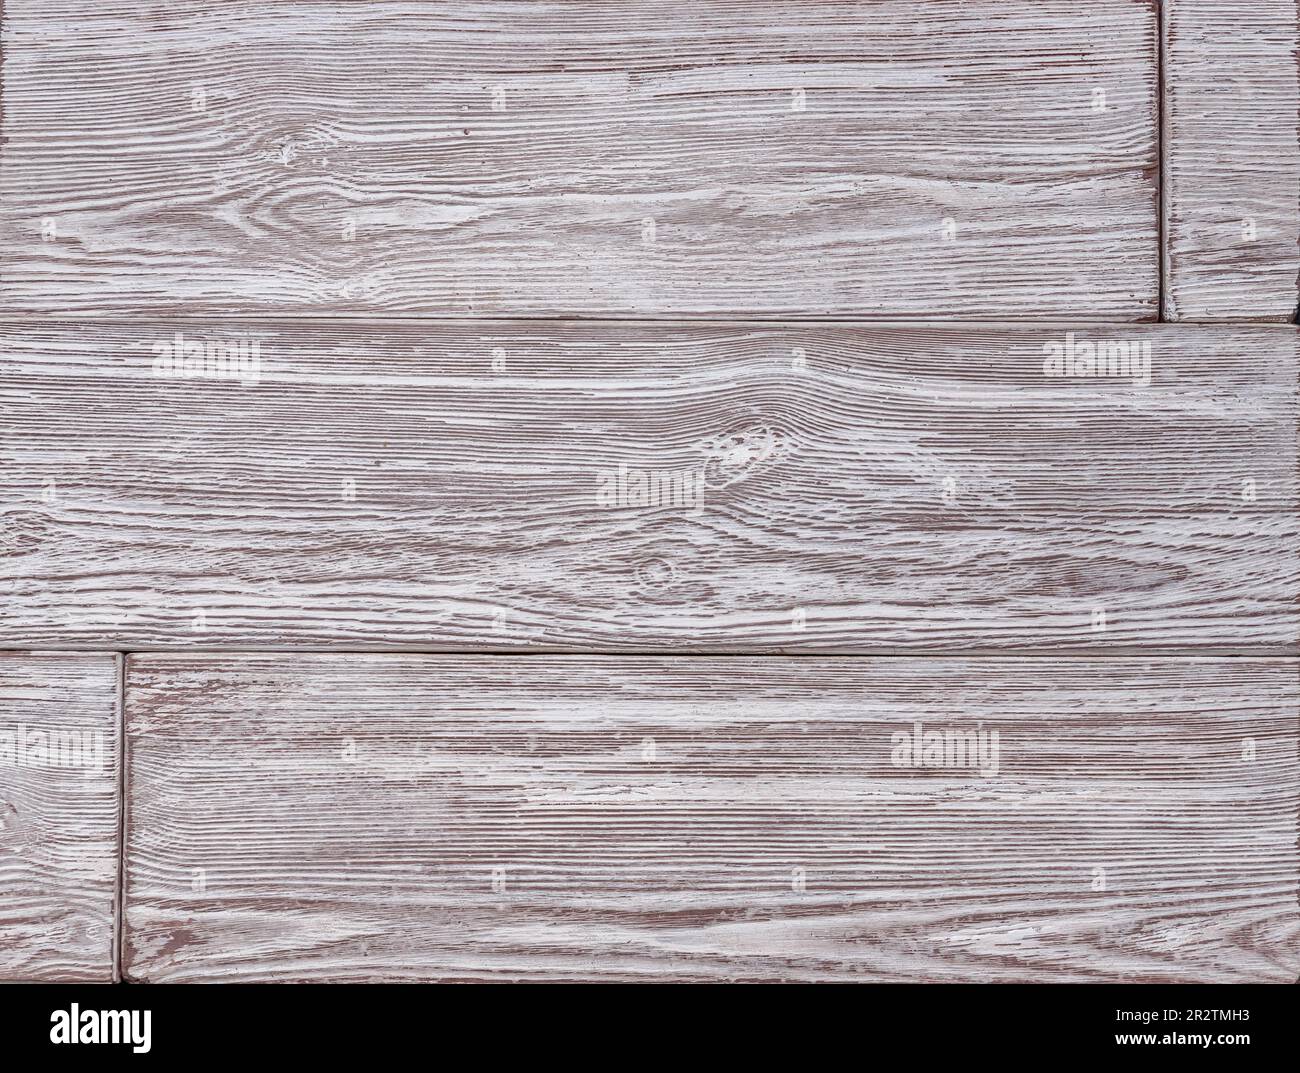 indoor fake wood paneling background texture